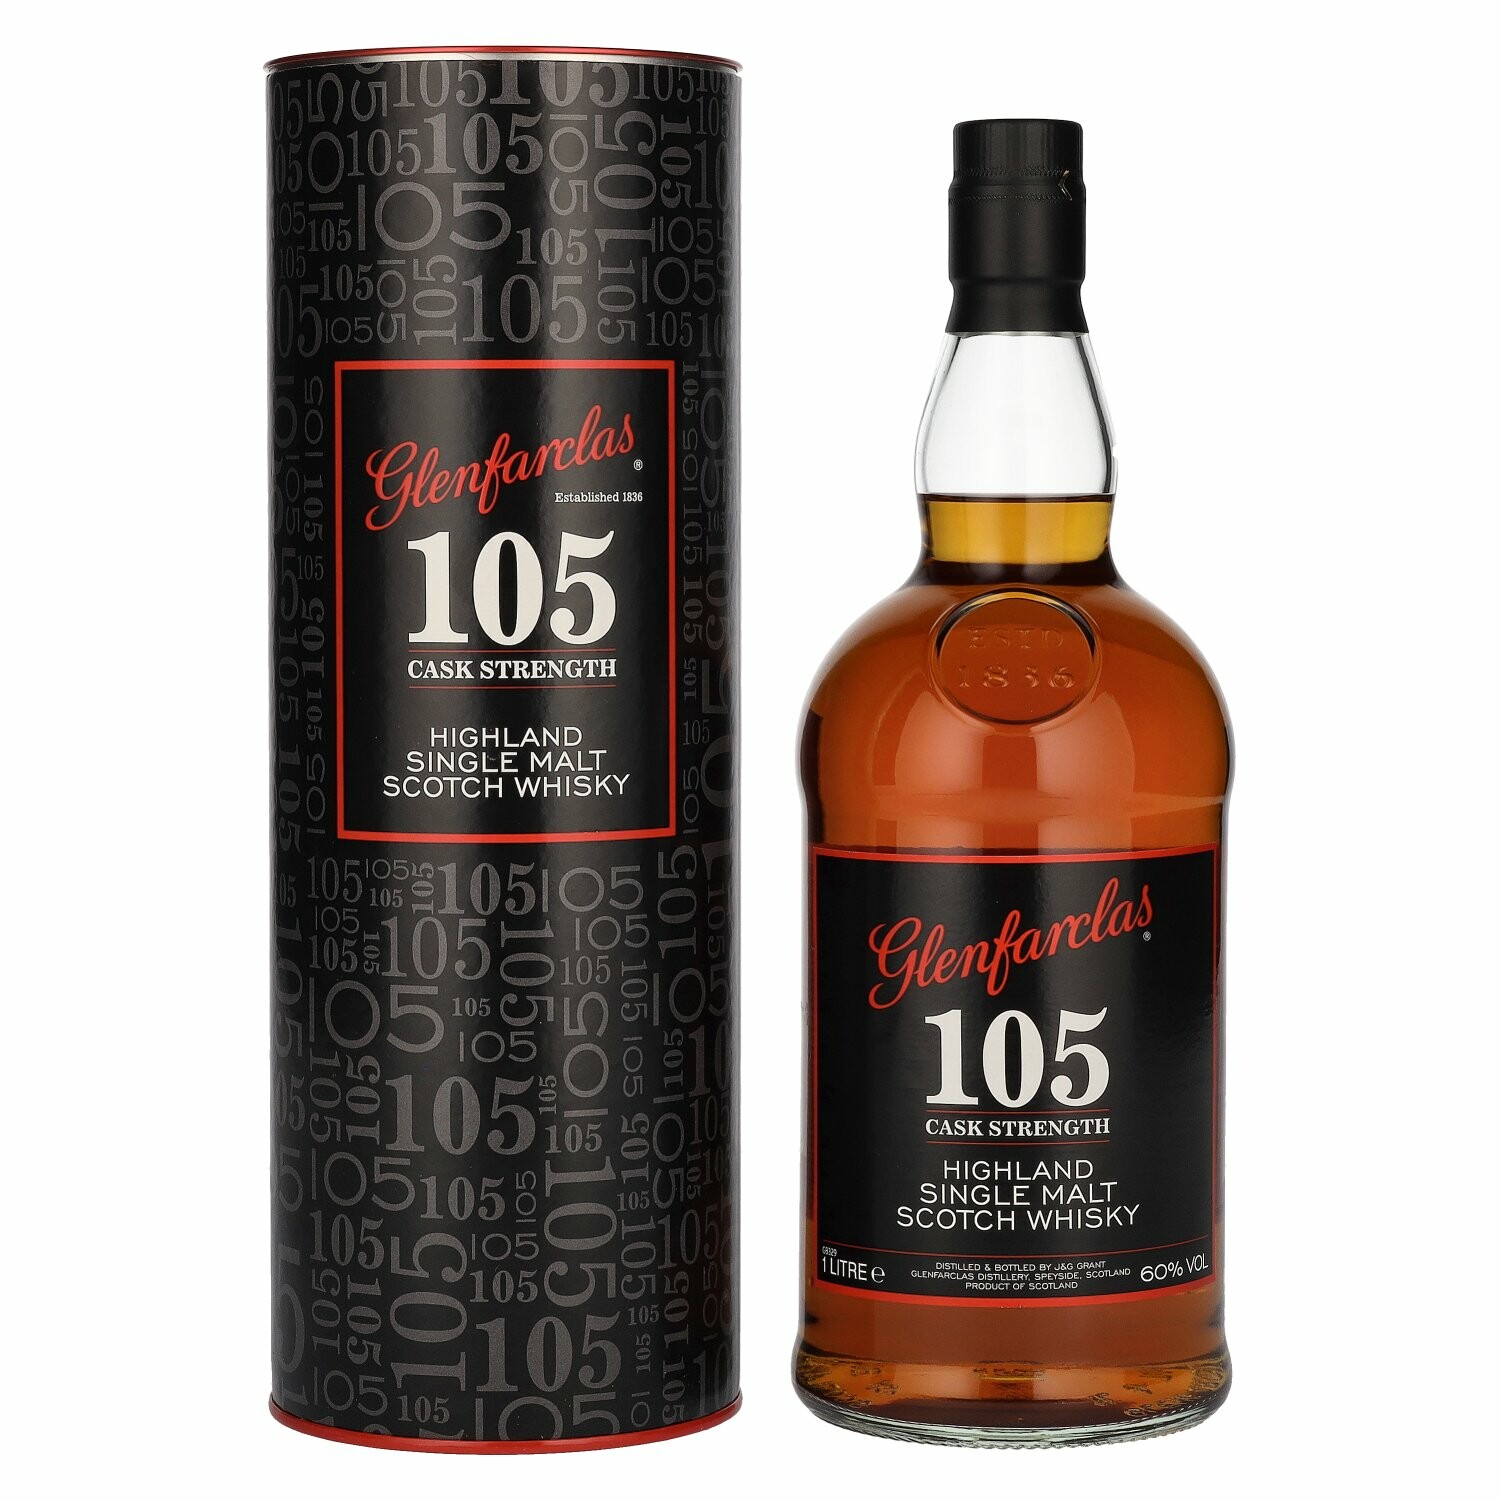 Glenfarclas 105 CASK STRENGTH Highland Single Malt 60% Vol. 1l in Giftbox